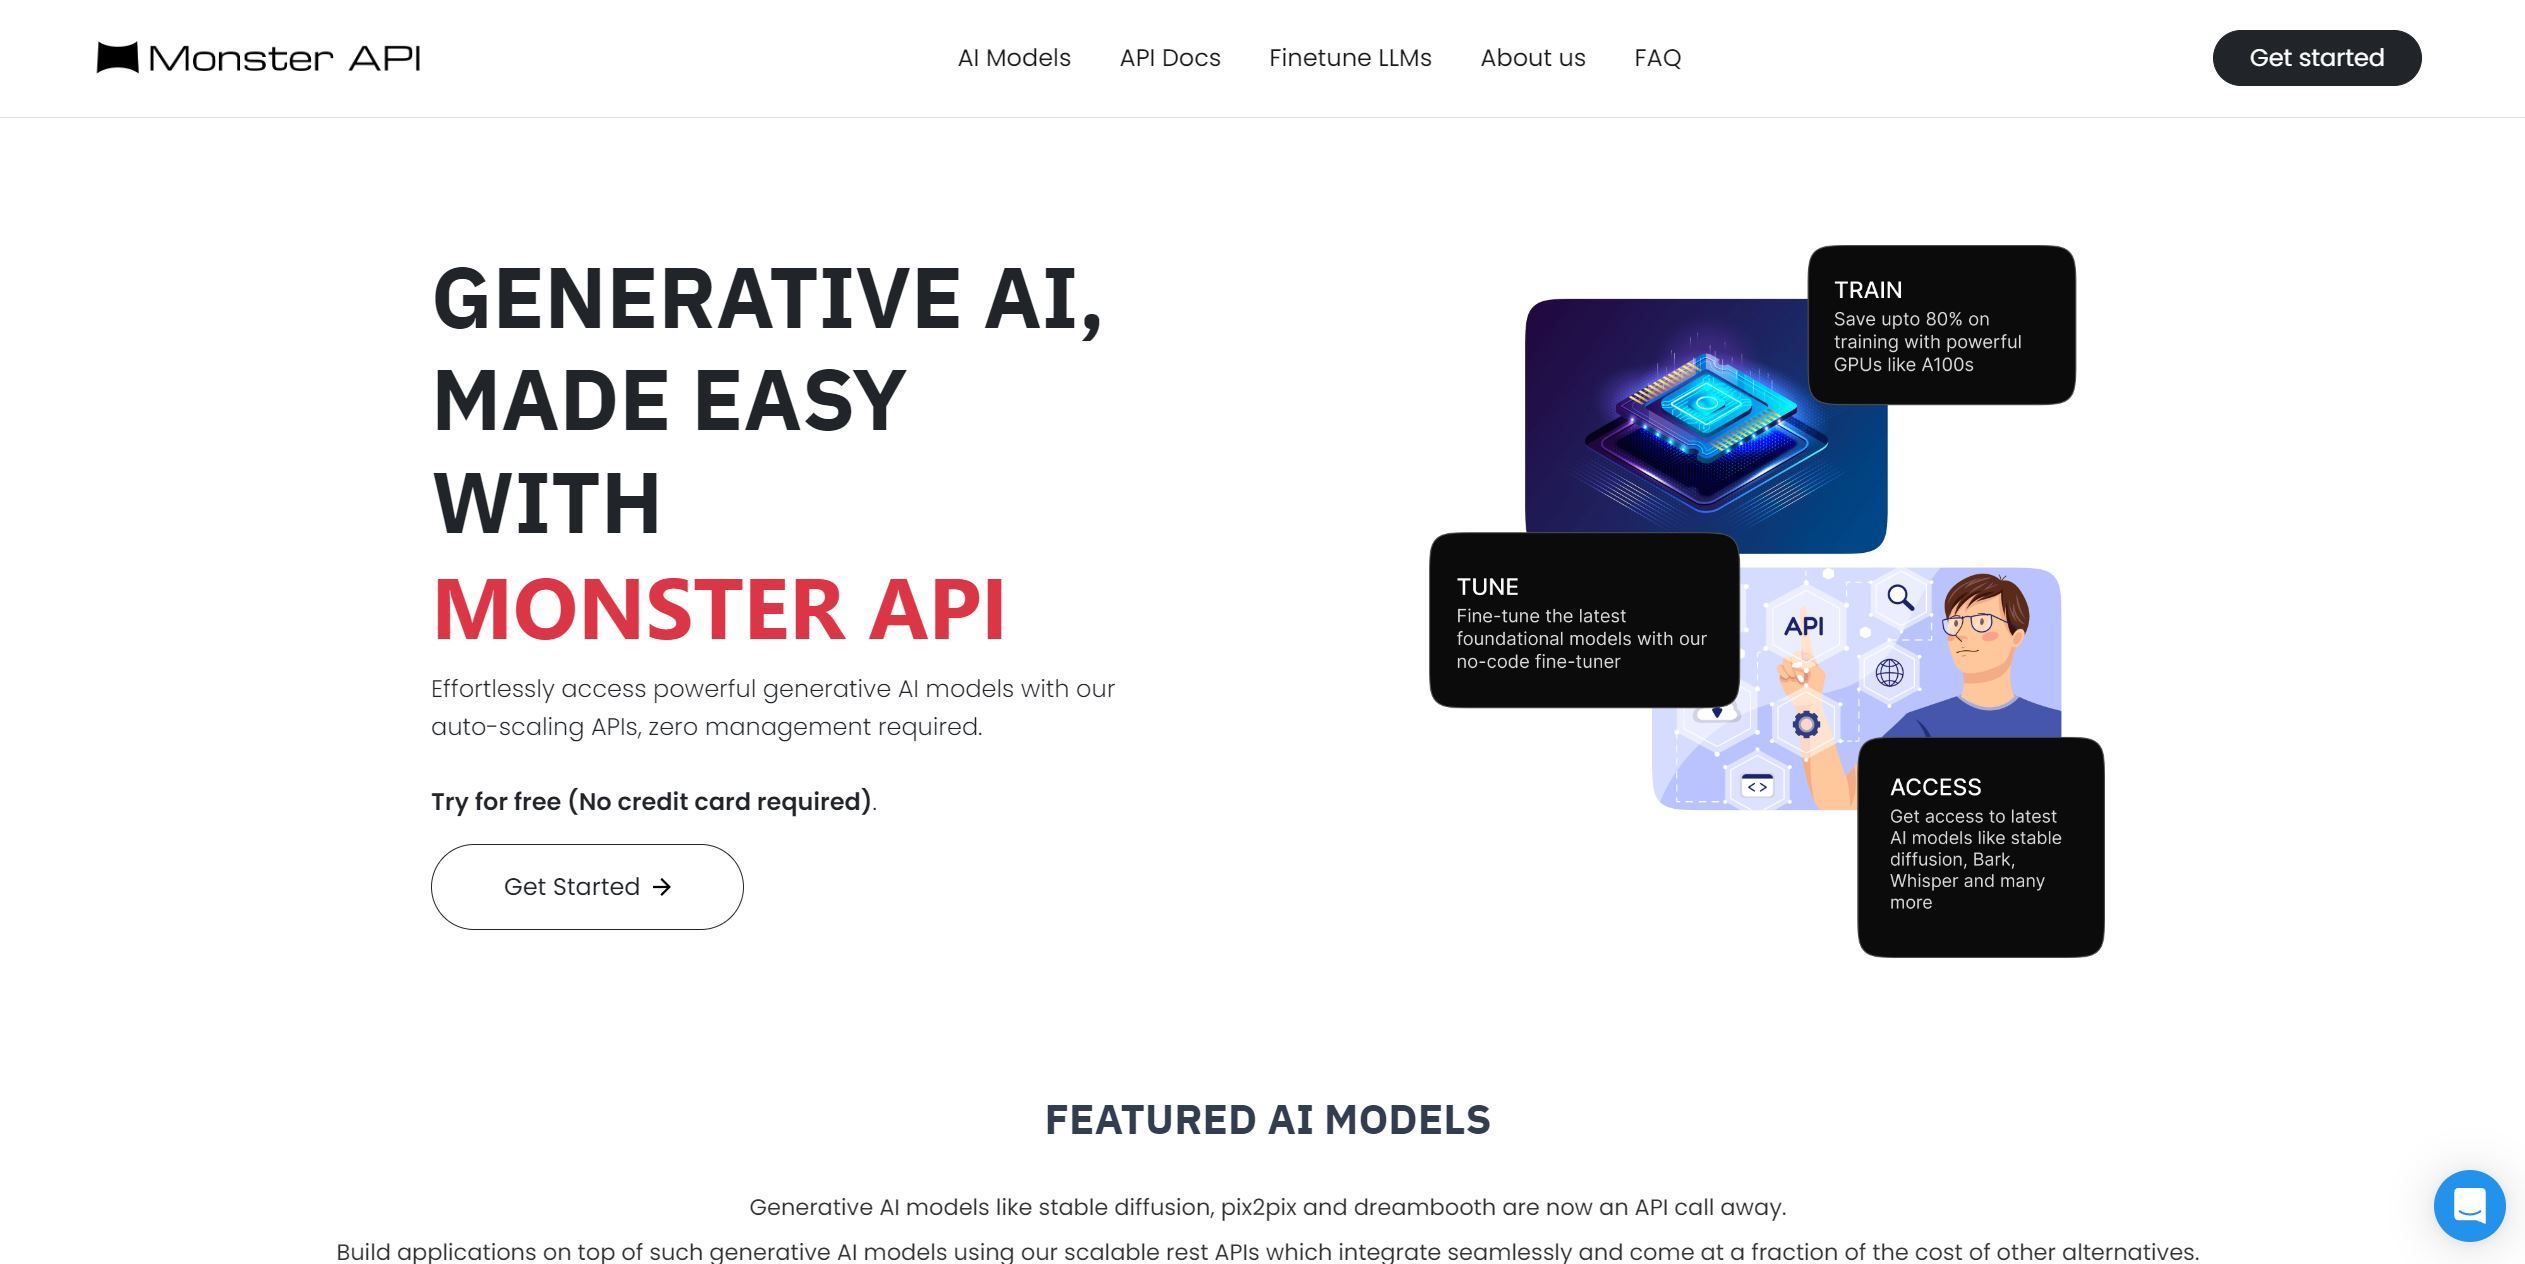 Monster APIScalable image and text generation platform designed for developers